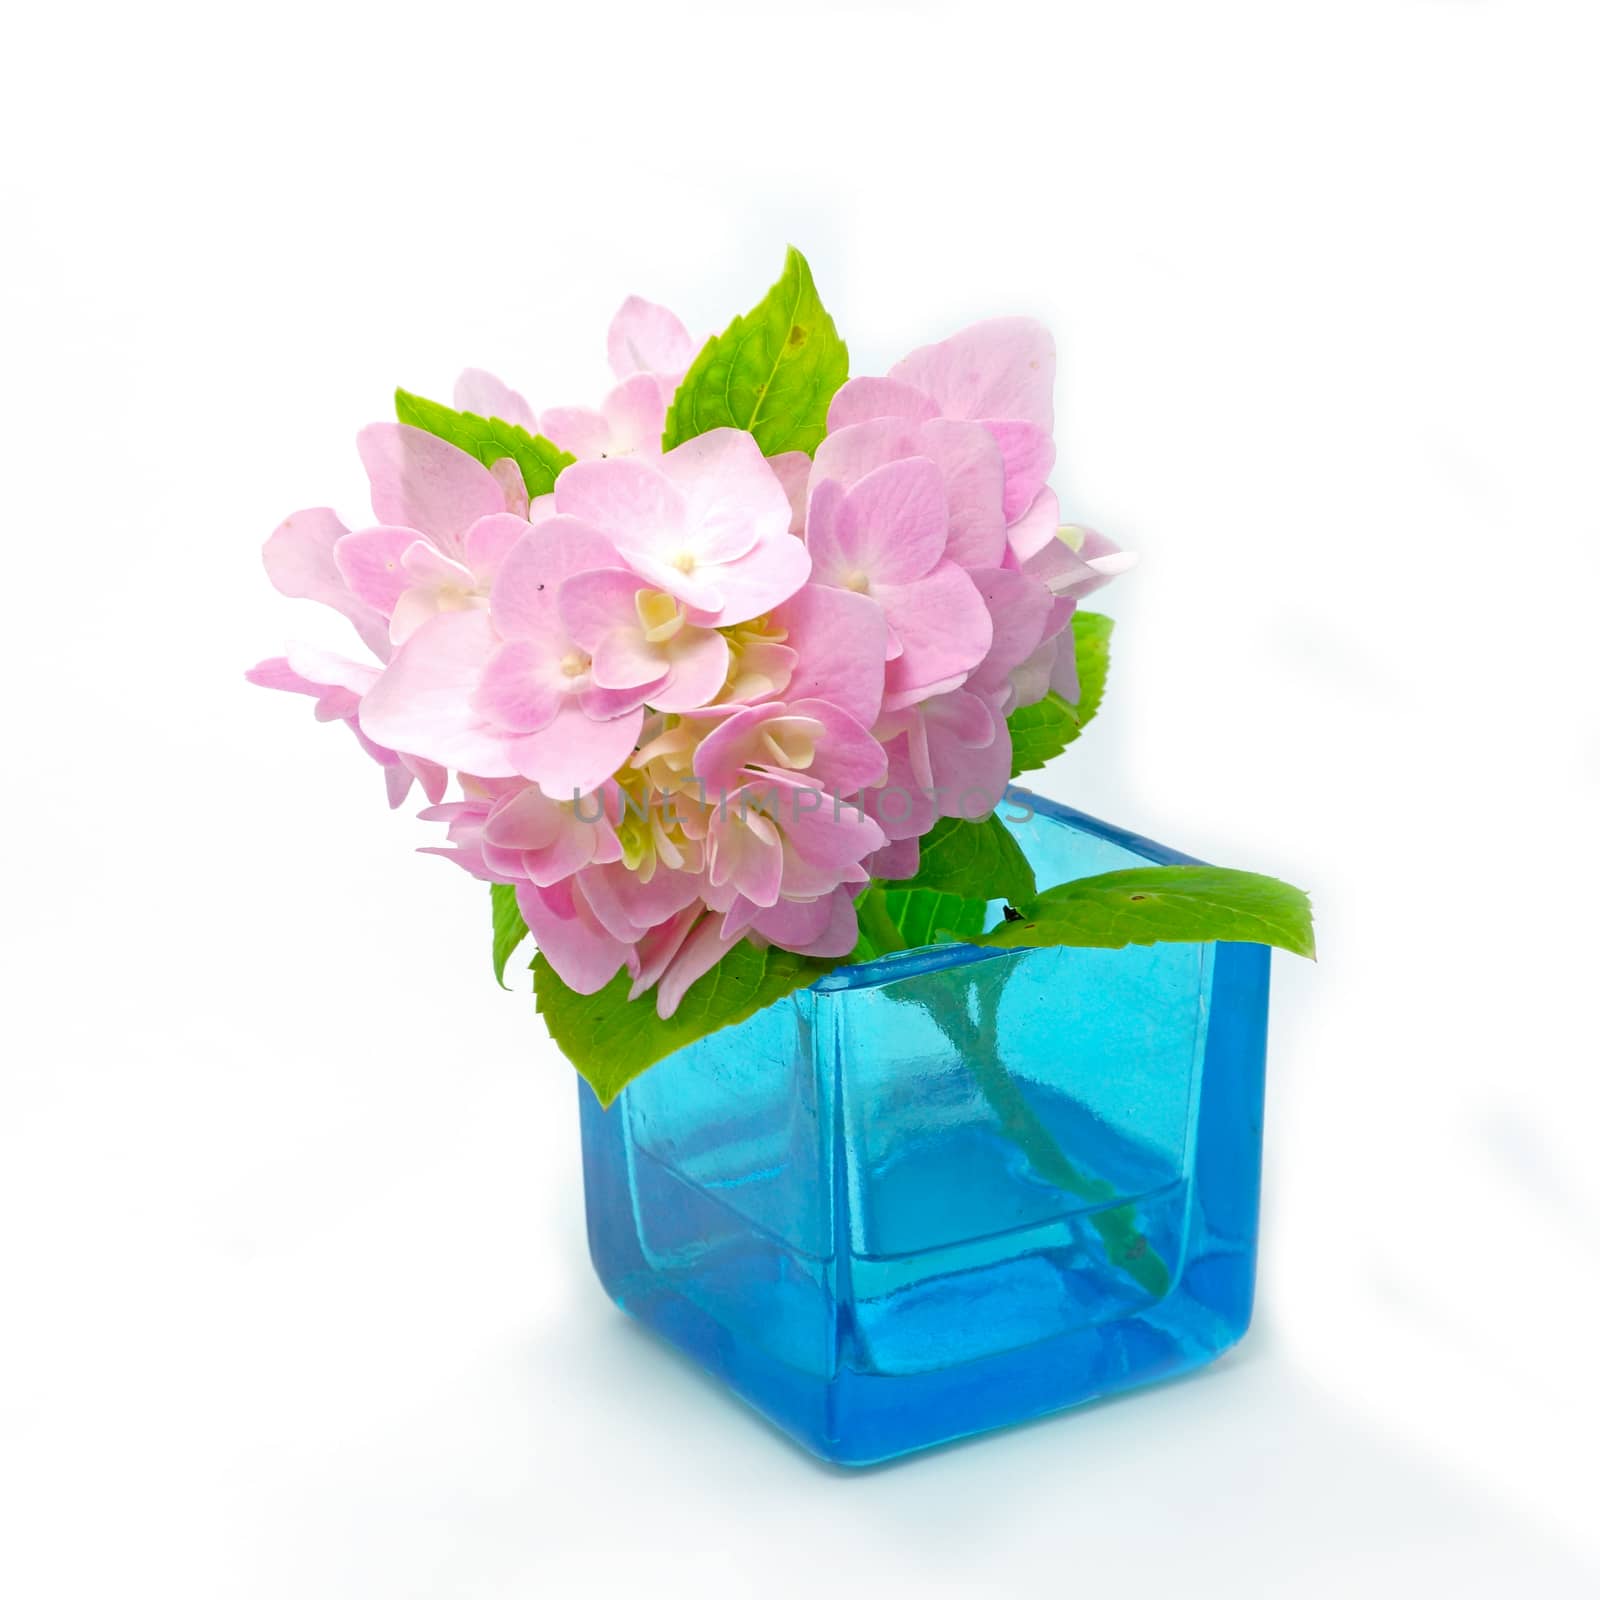 Pink Hydrangea flowers in blue glass. by Noppharat_th